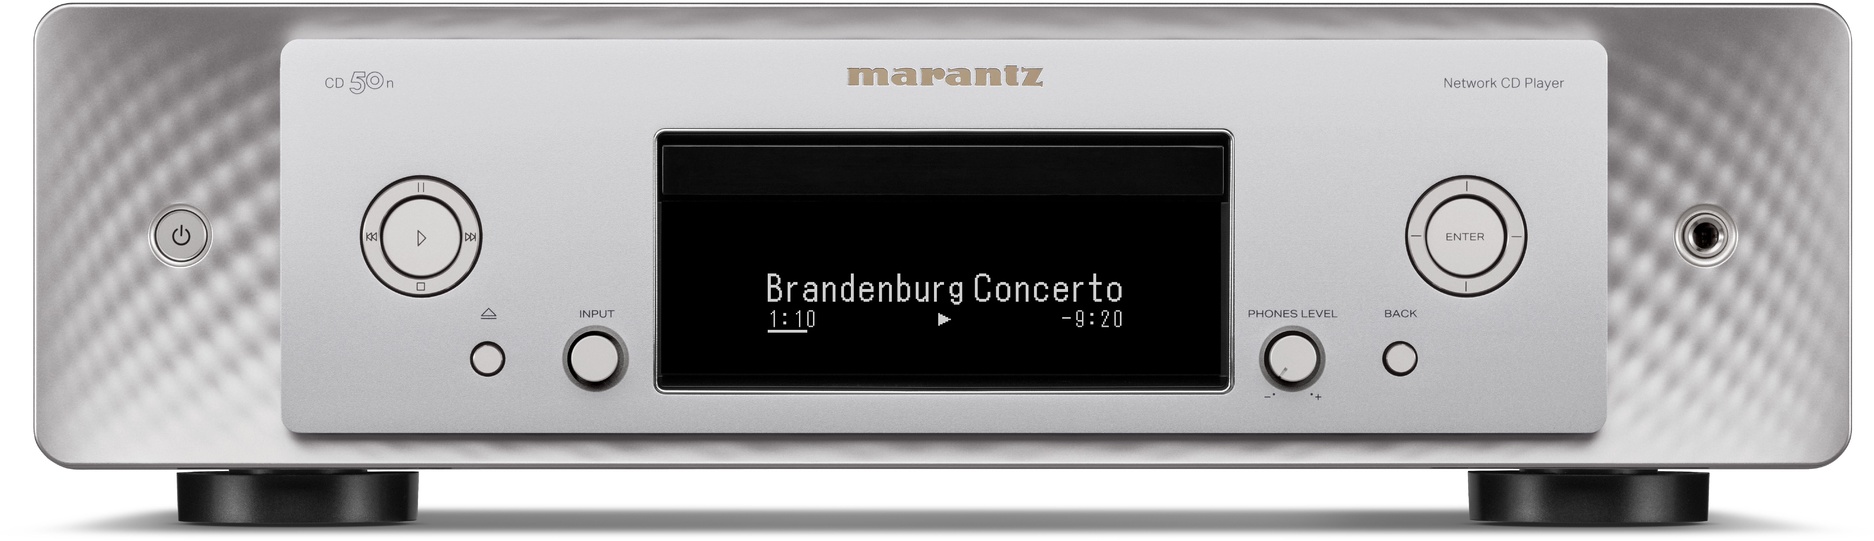 Marantz CD50n (Farbe: silbergold)